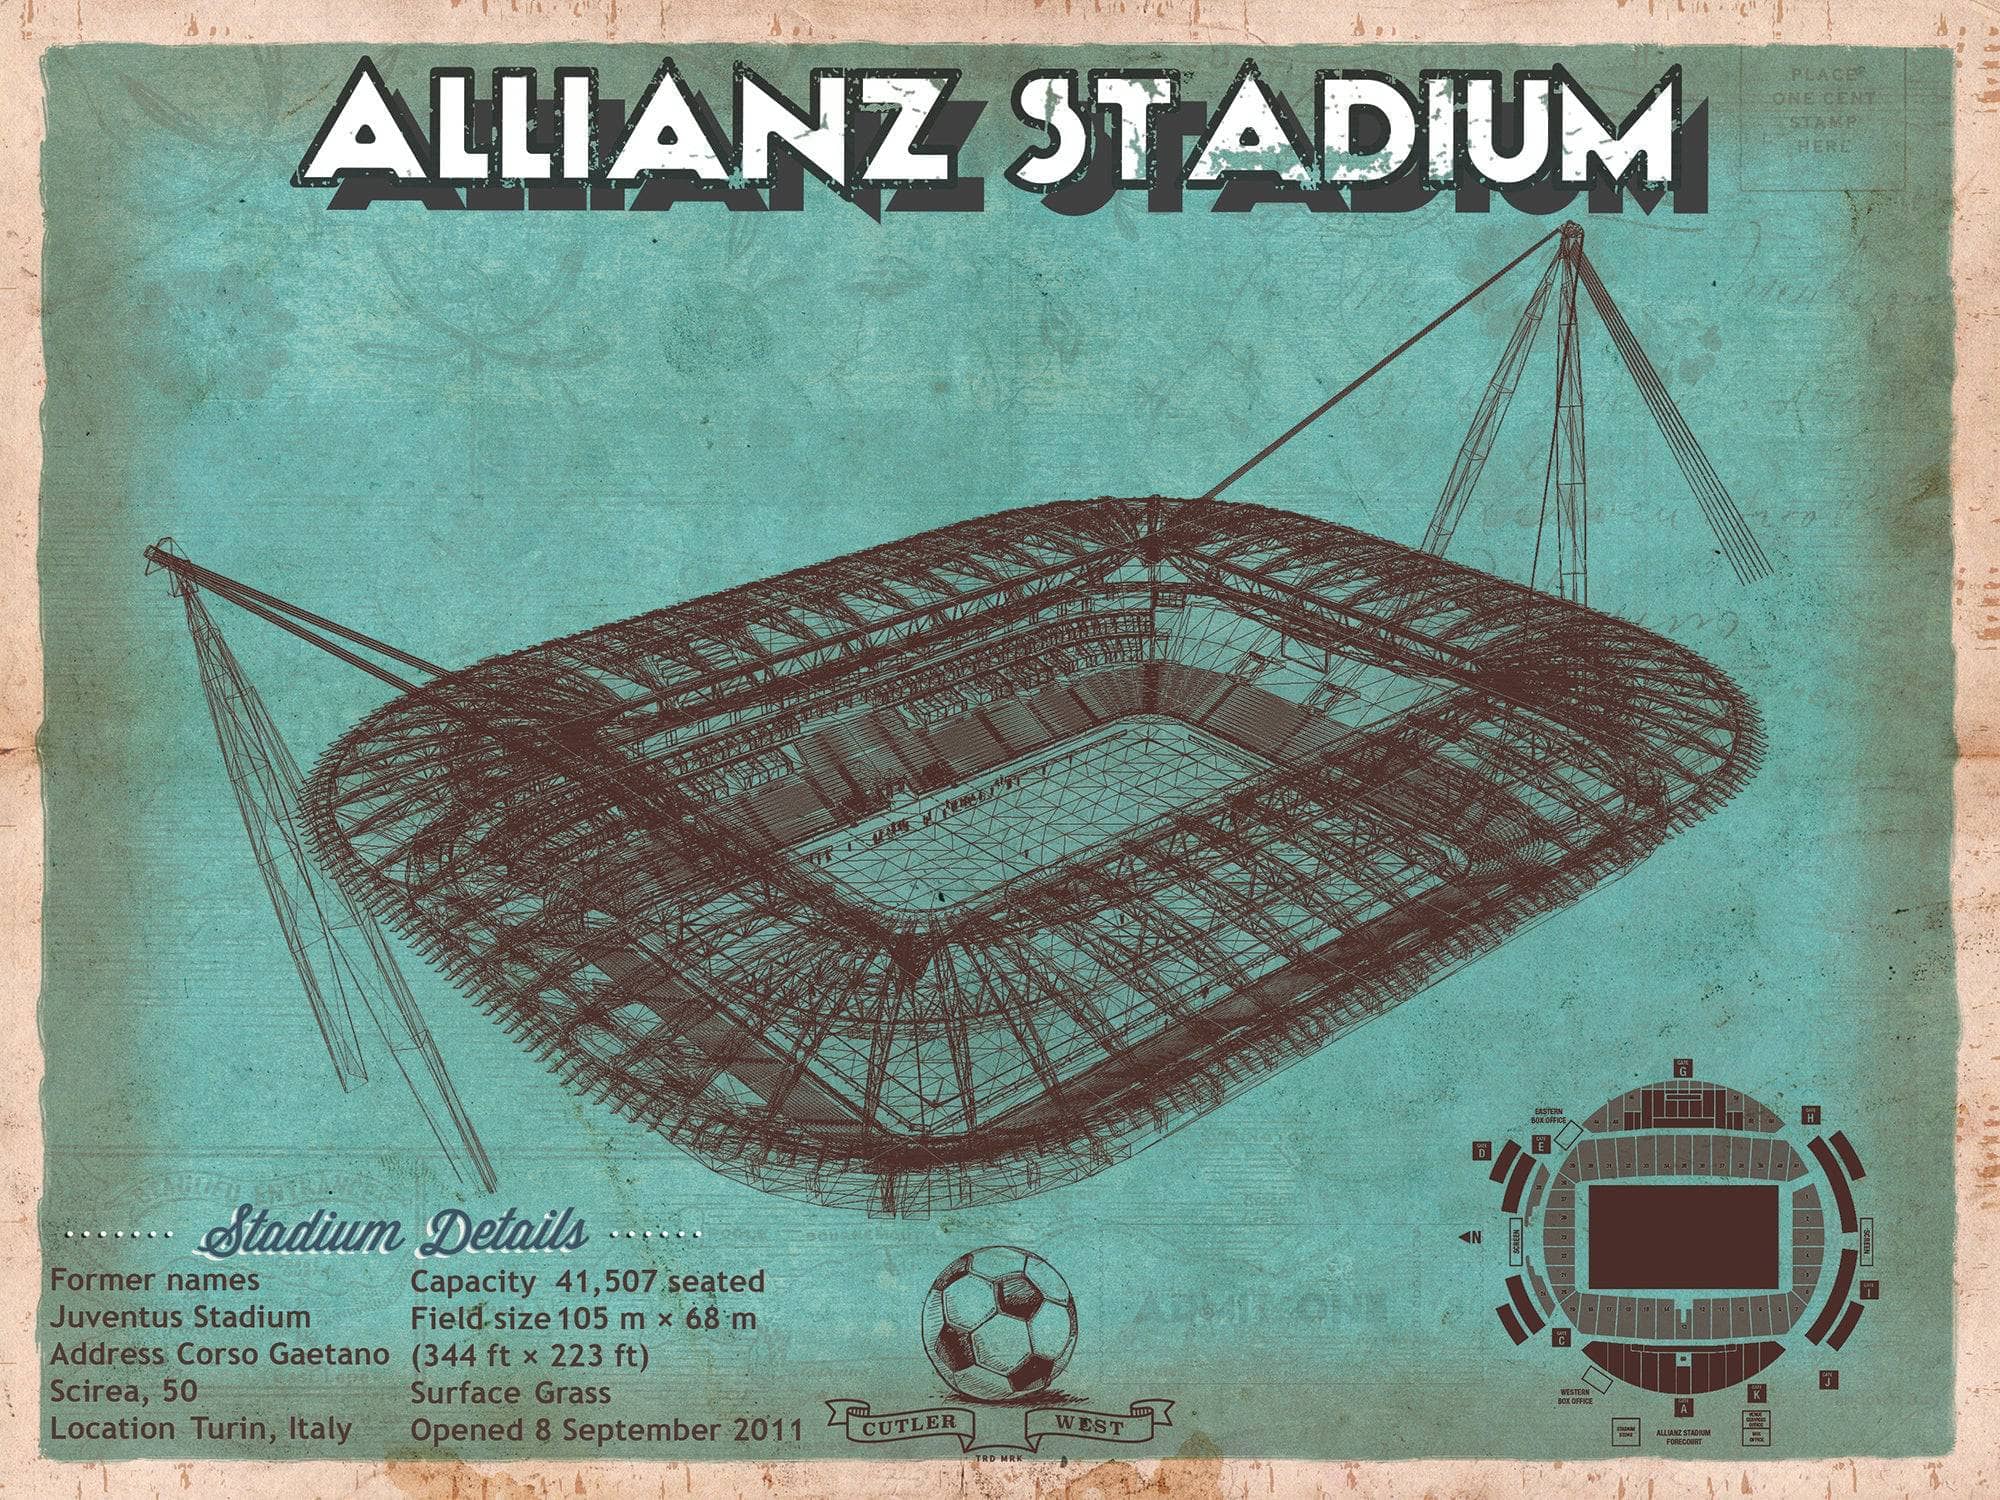 Cutler West Soccer Collection 14" x 11" / Unframed Juventus Football Club Allianz Stadium Stadium Soccer Team Color Print 703397530_56327